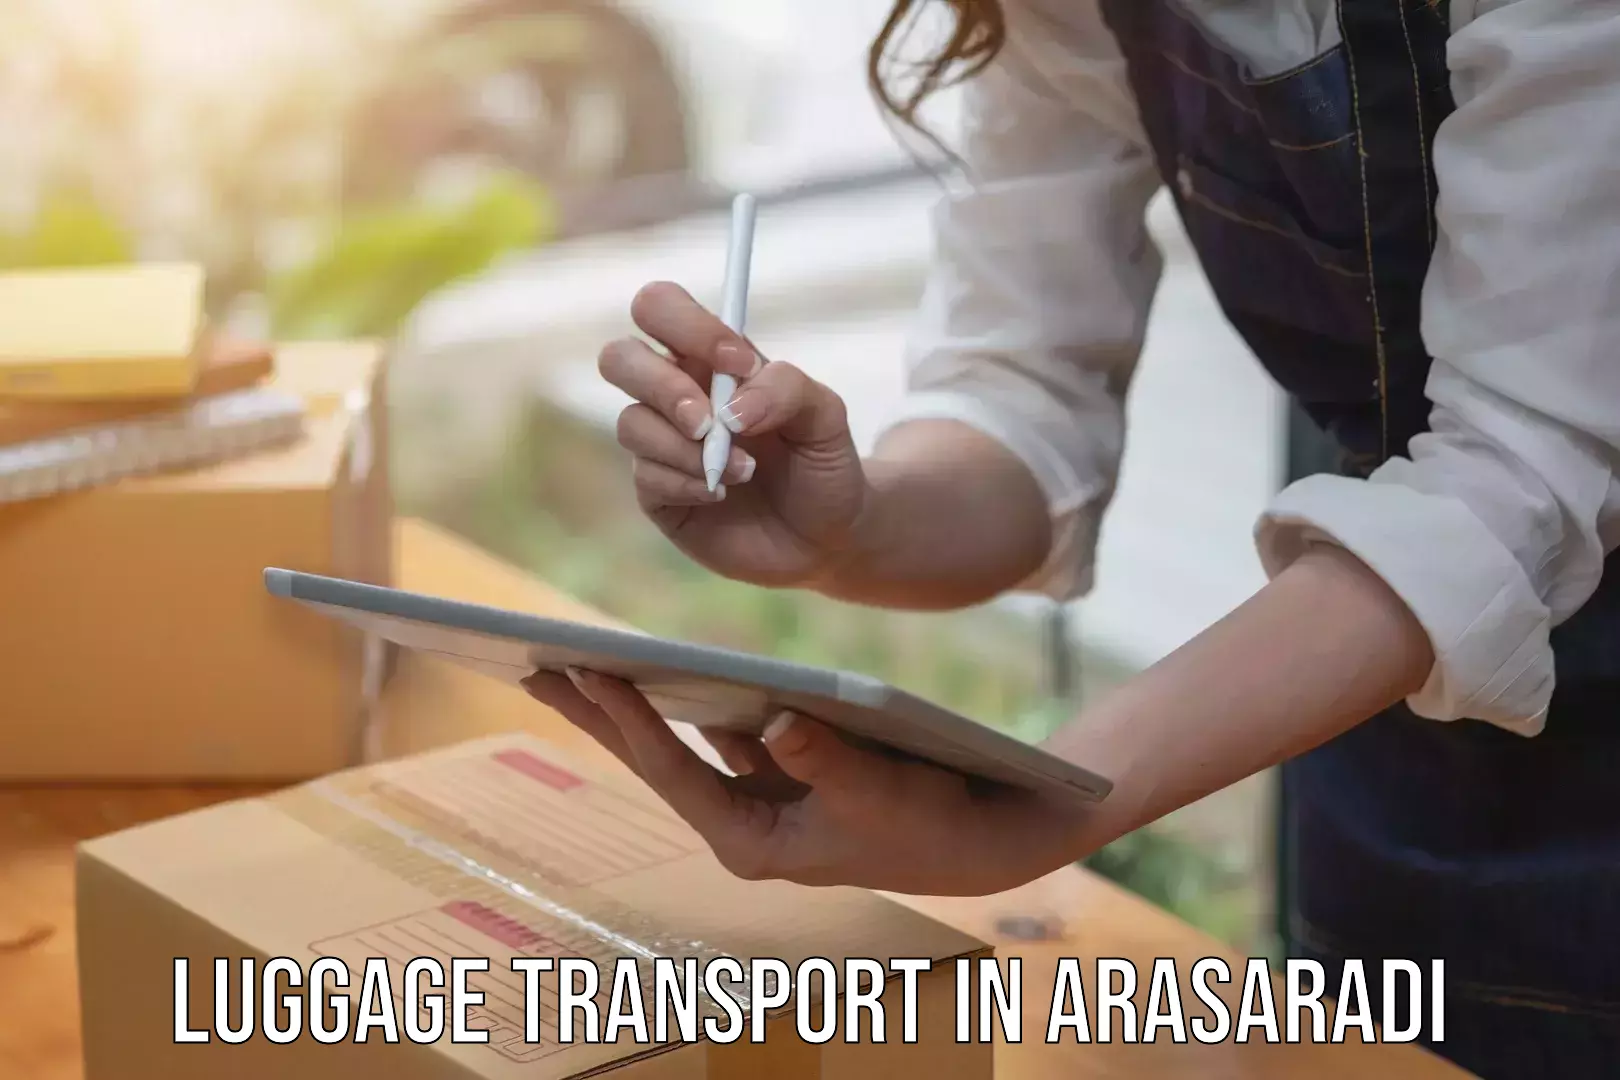 Luggage transport solutions in Arasaradi